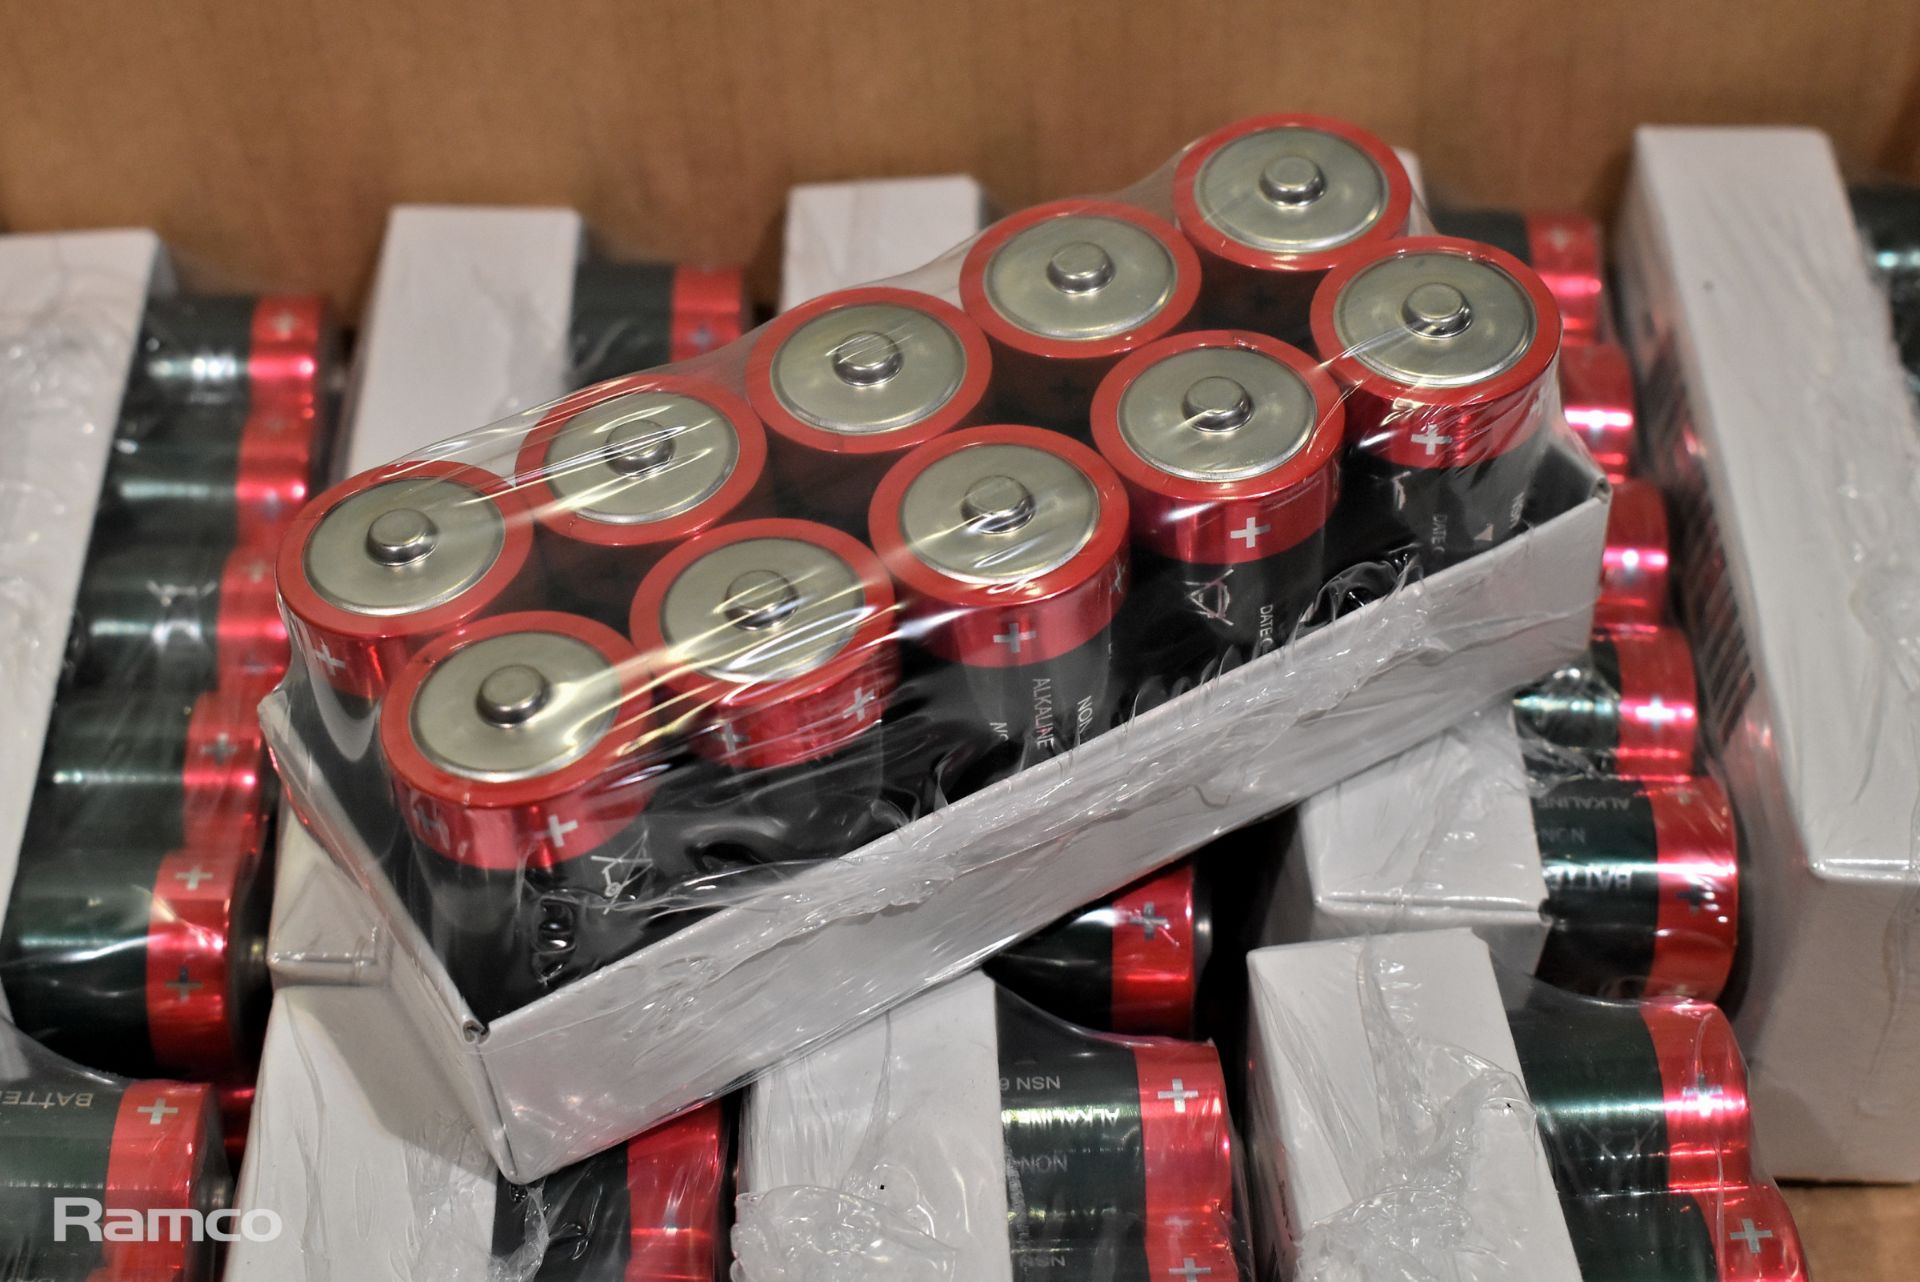 10x Packs of LR14 1.5V alkaline batteries - 10 batteries per pack - Image 2 of 4